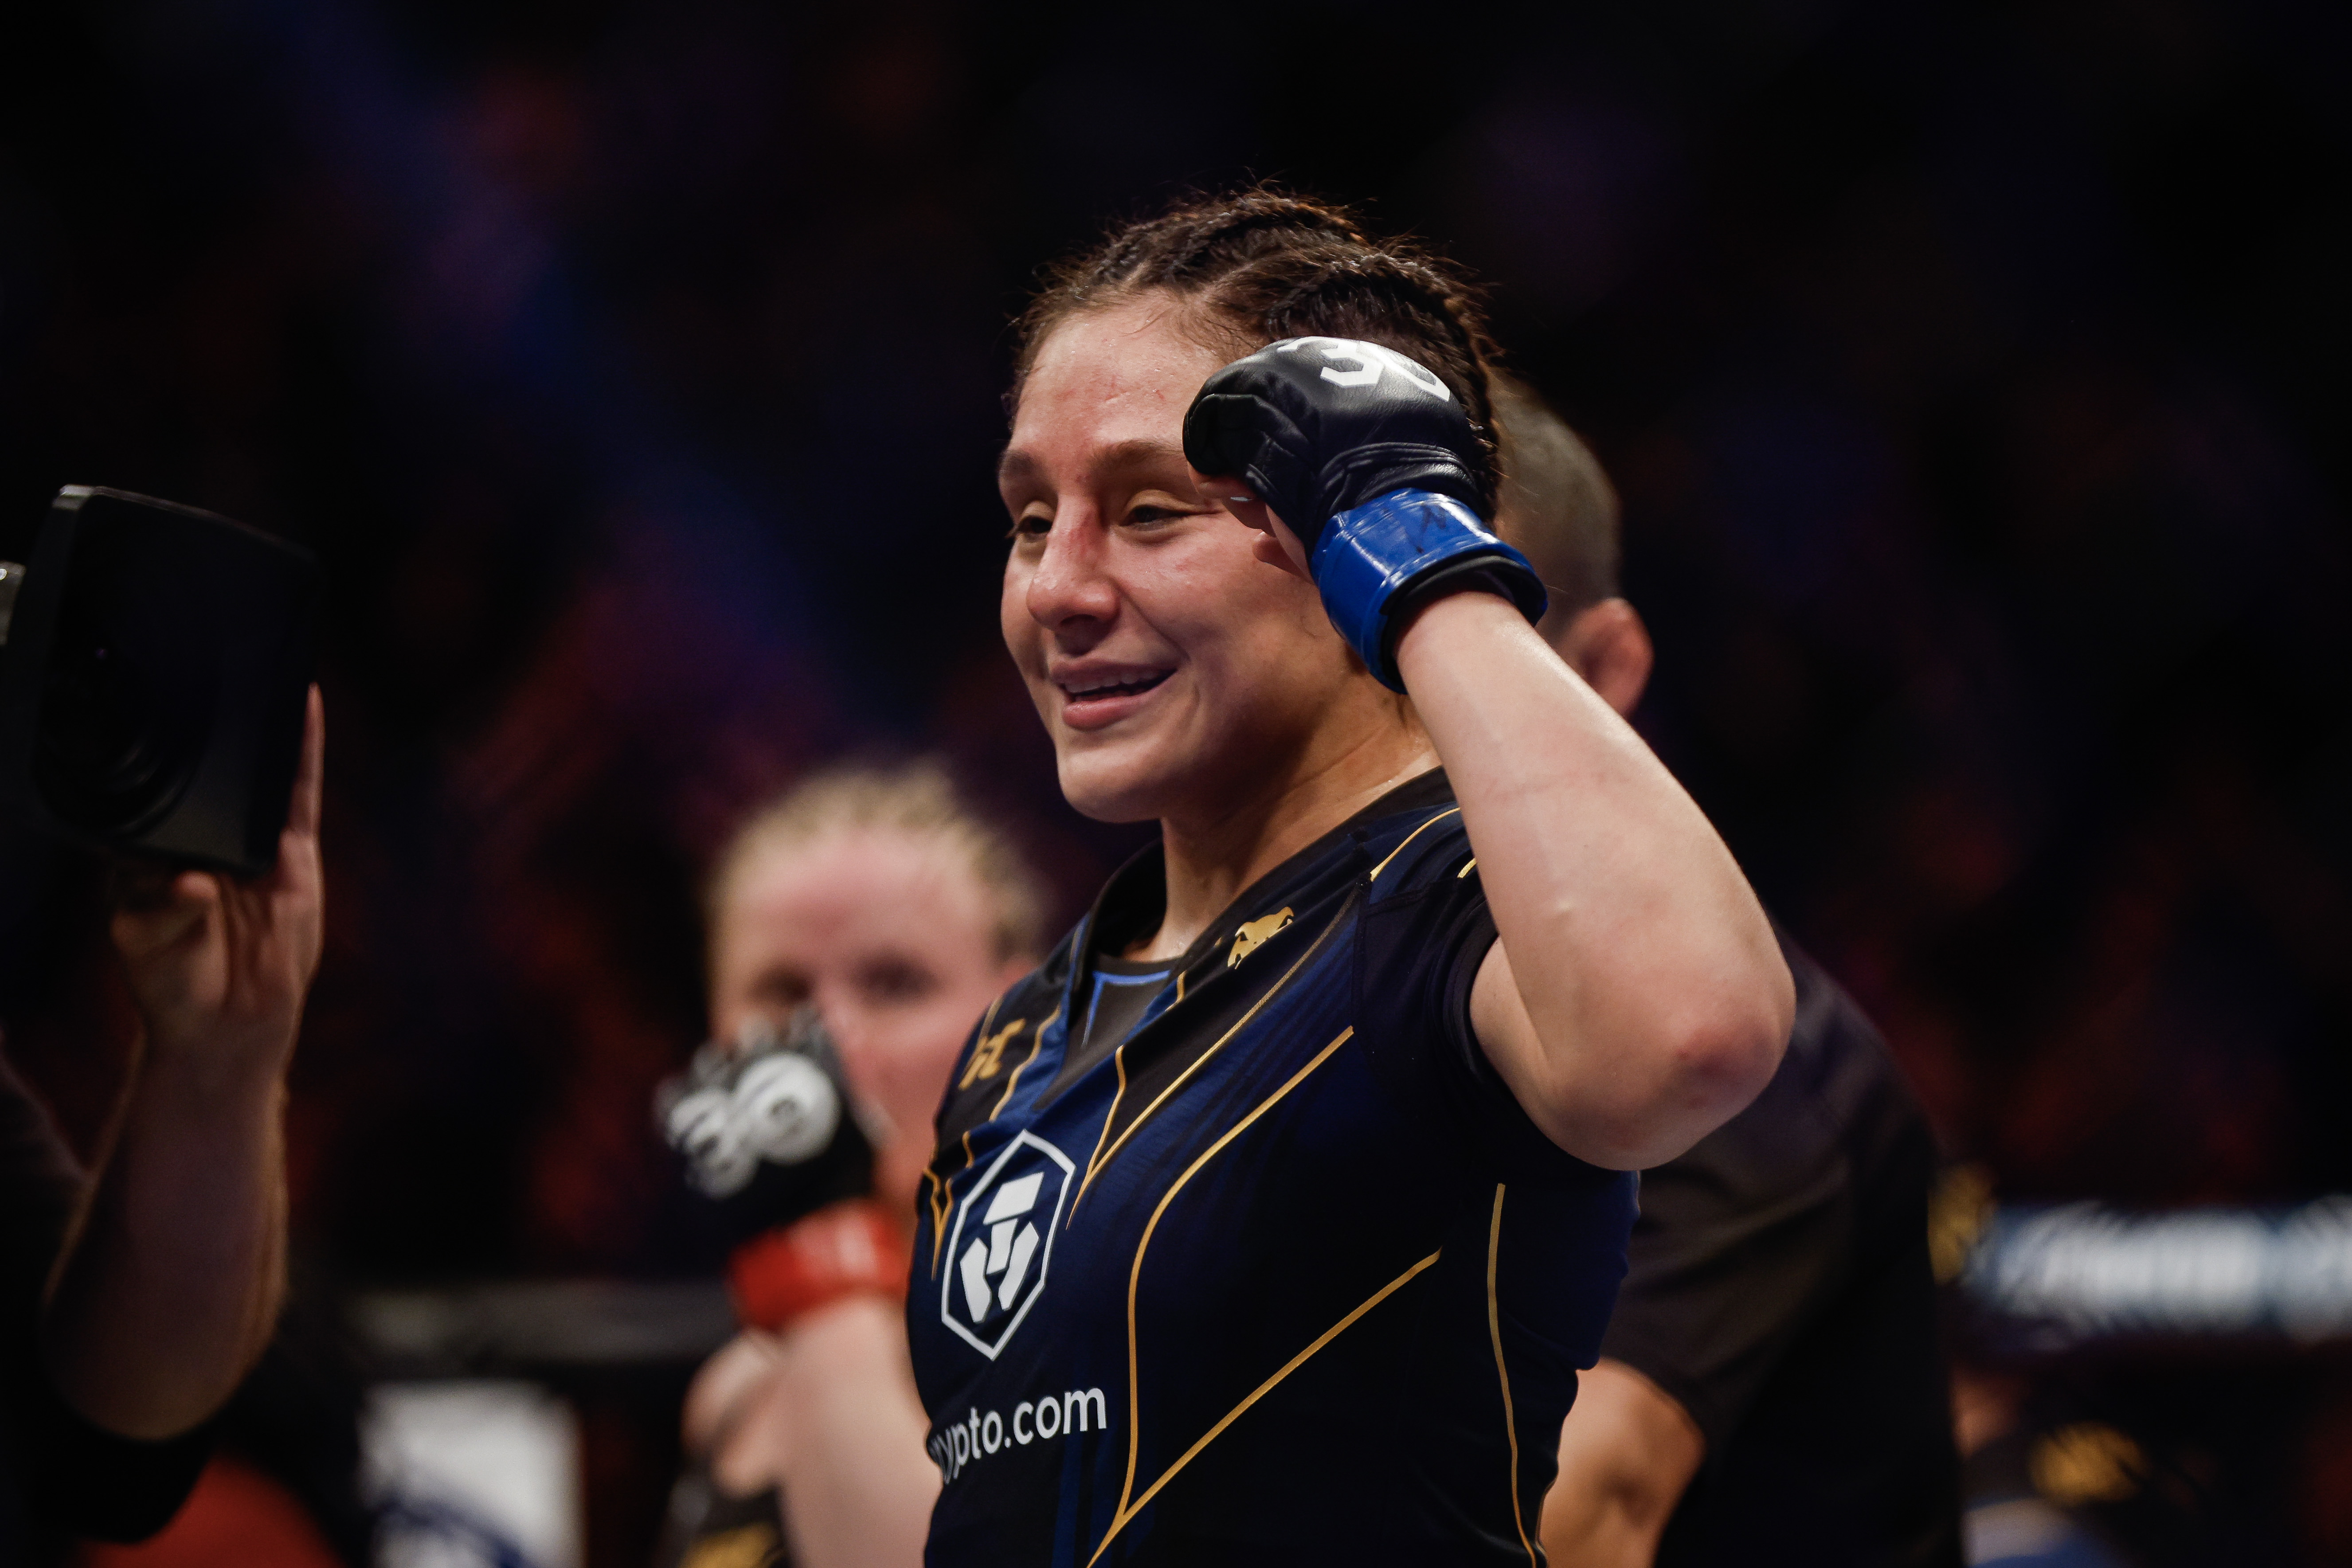 Alexa Grasso defeated Valentina Shevchenko at UFC 285.